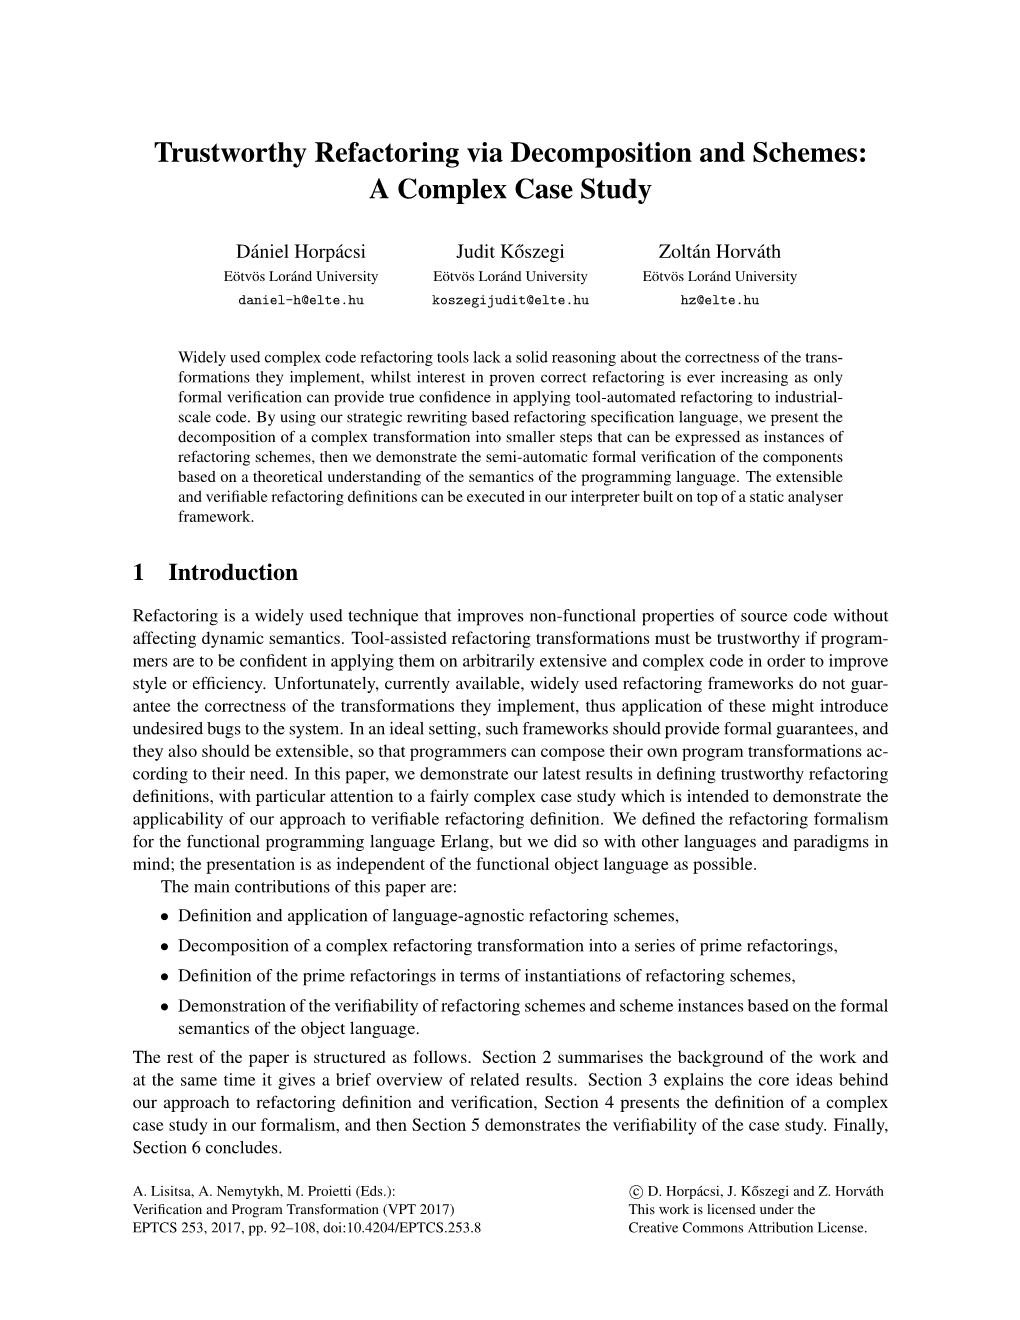 Trustworthy Refactoring Via Decomposition and Schemes: a Complex Case Study